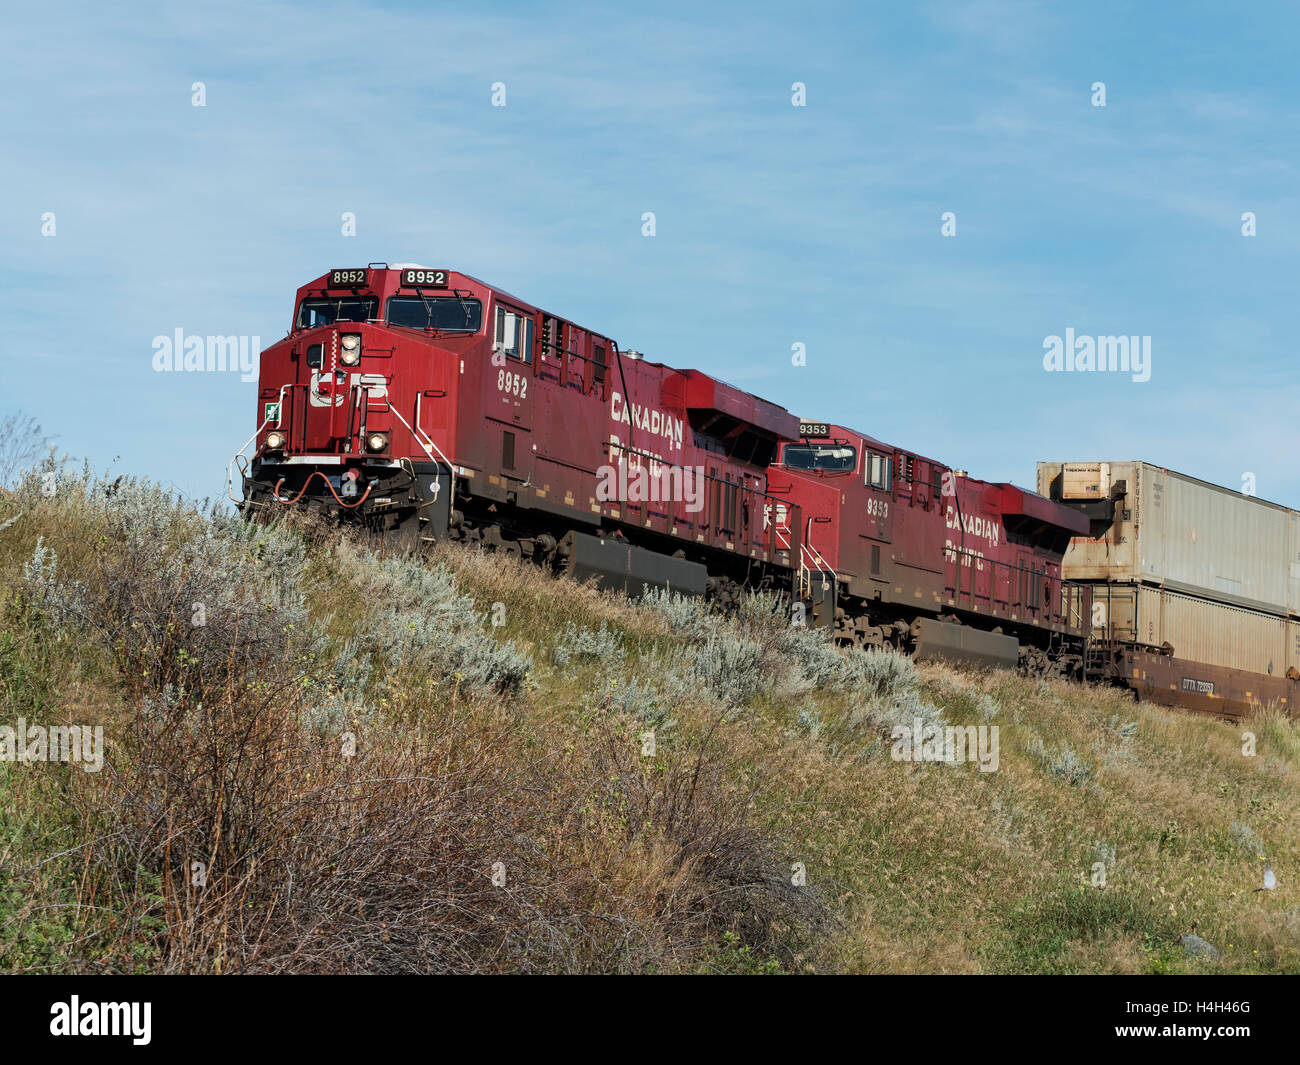 Canadian Pacific Railway locomotives pulling intermodal rail cars on a freight train, Alberta, Canada Stock Photo